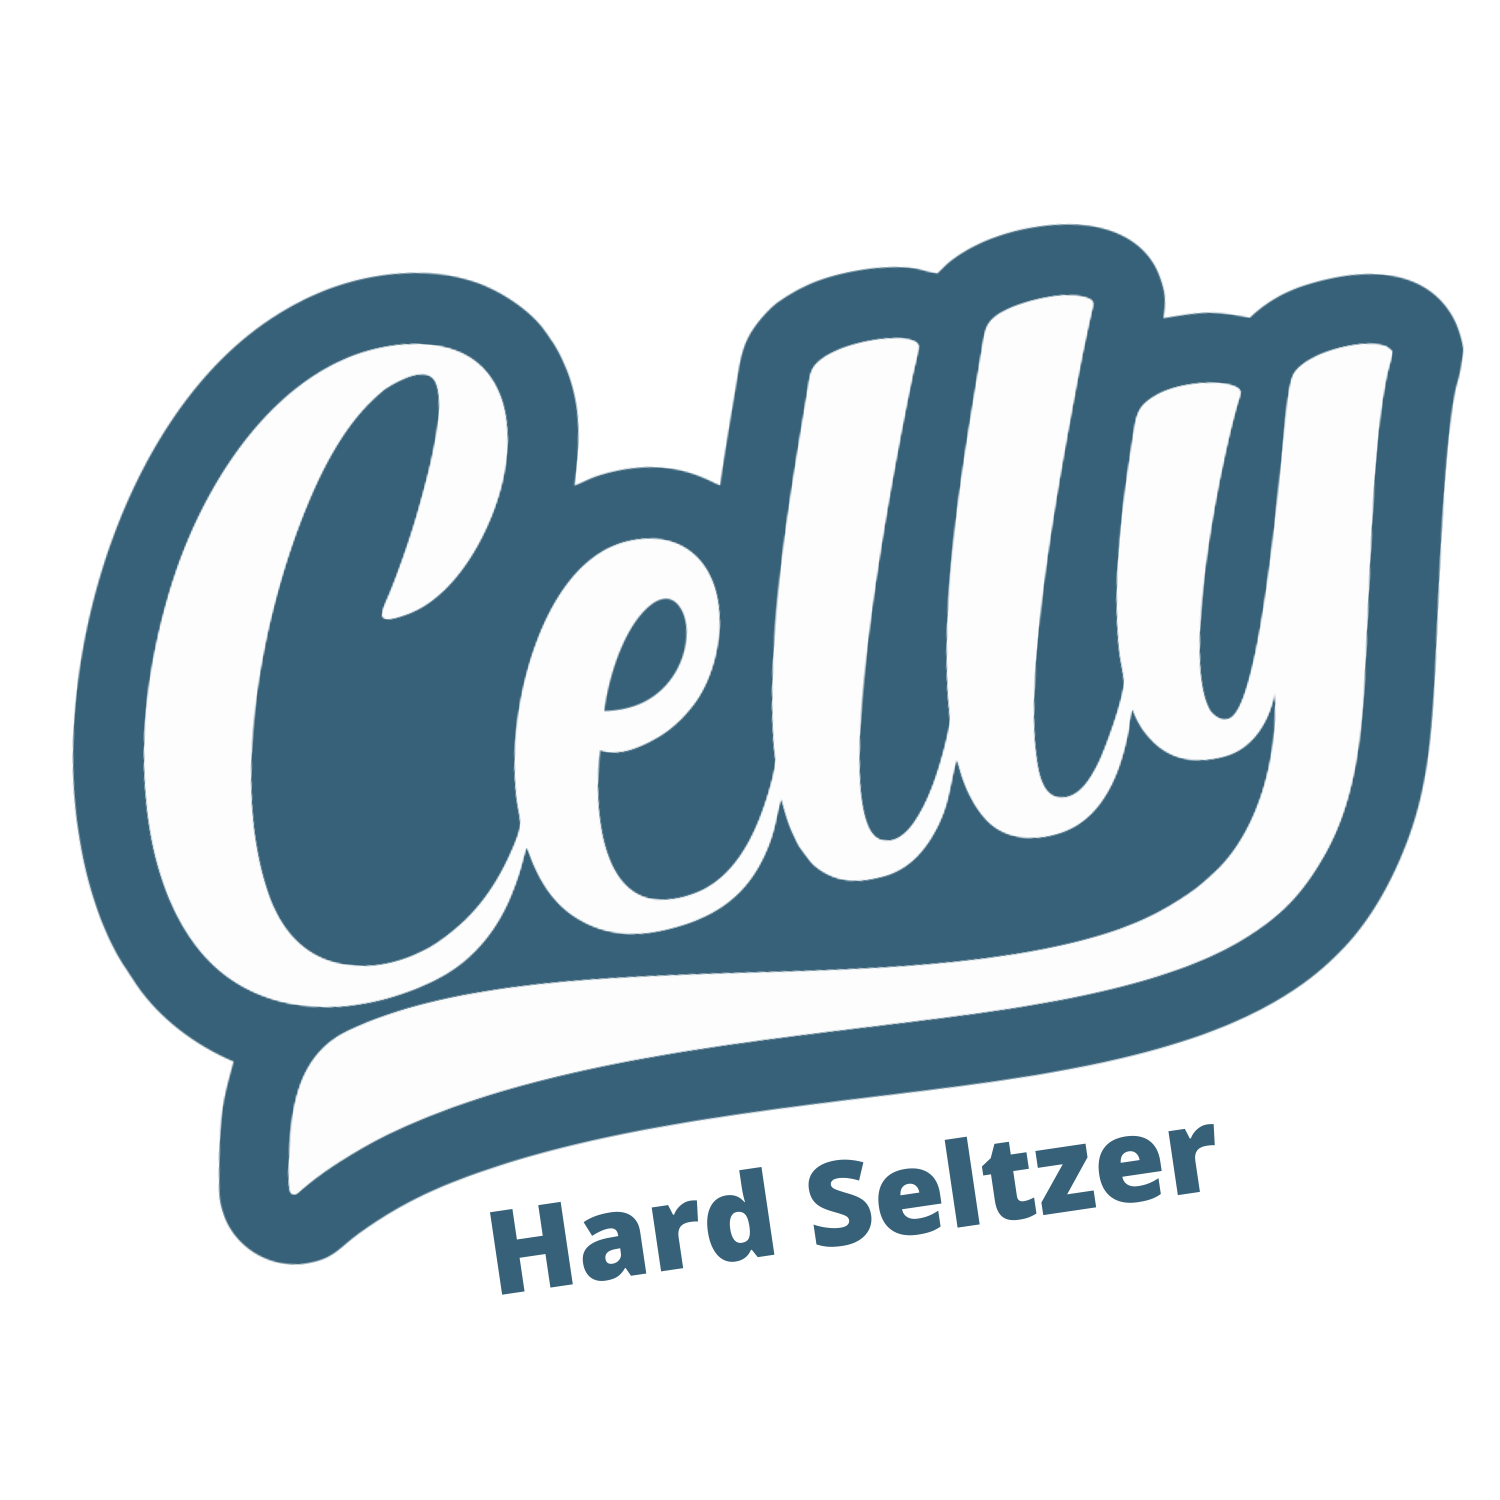 Celly Hard Seltzer